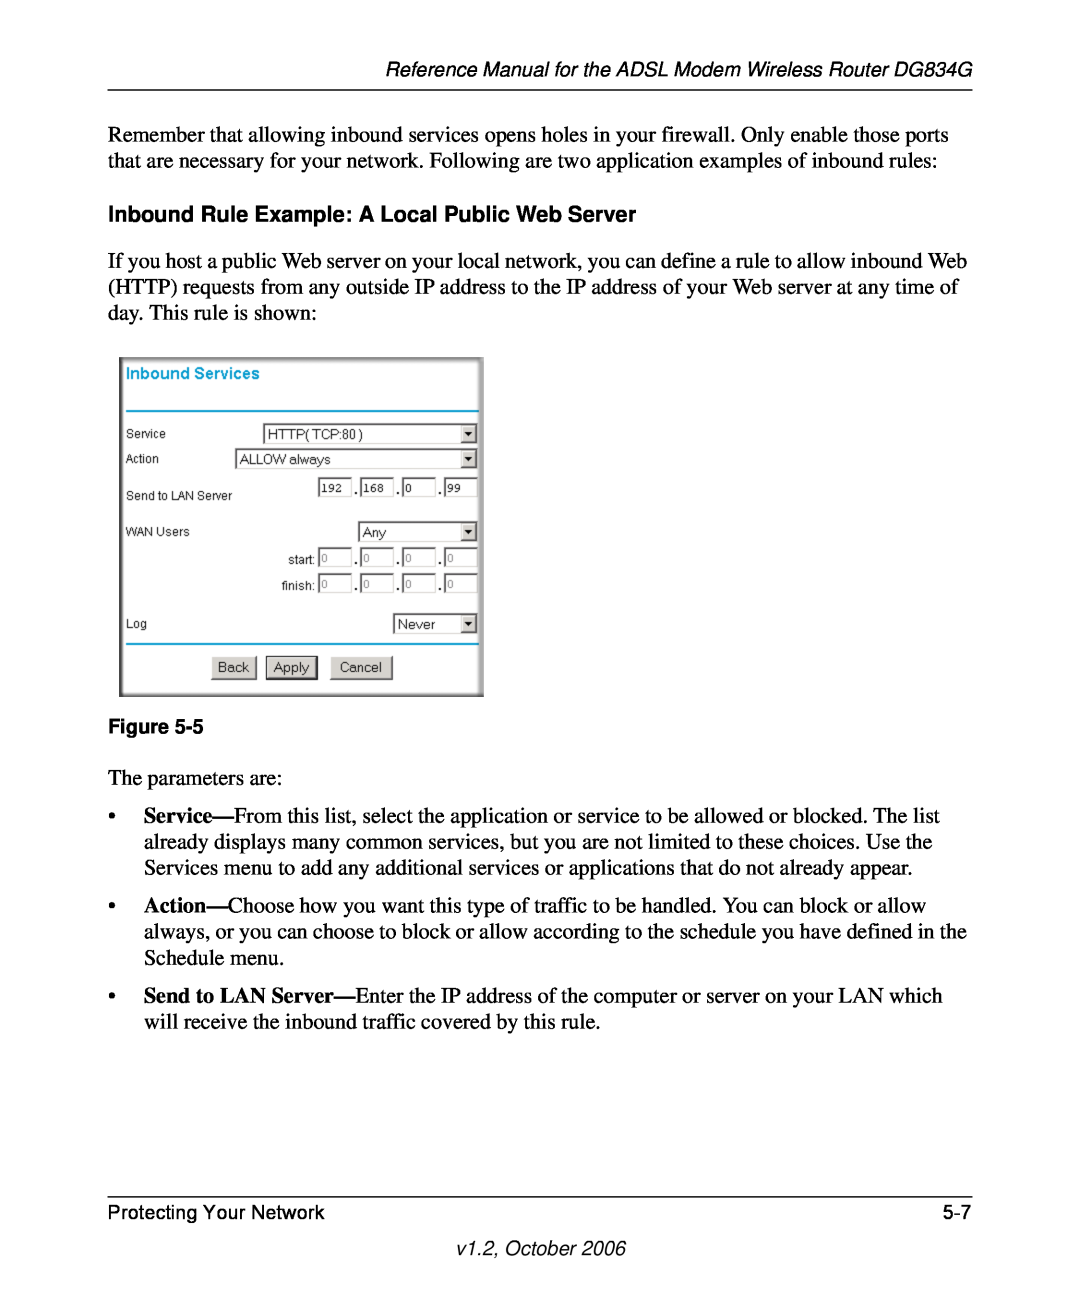 NETGEAR DG834G manual Inbound Rule Example A Local Public Web Server 